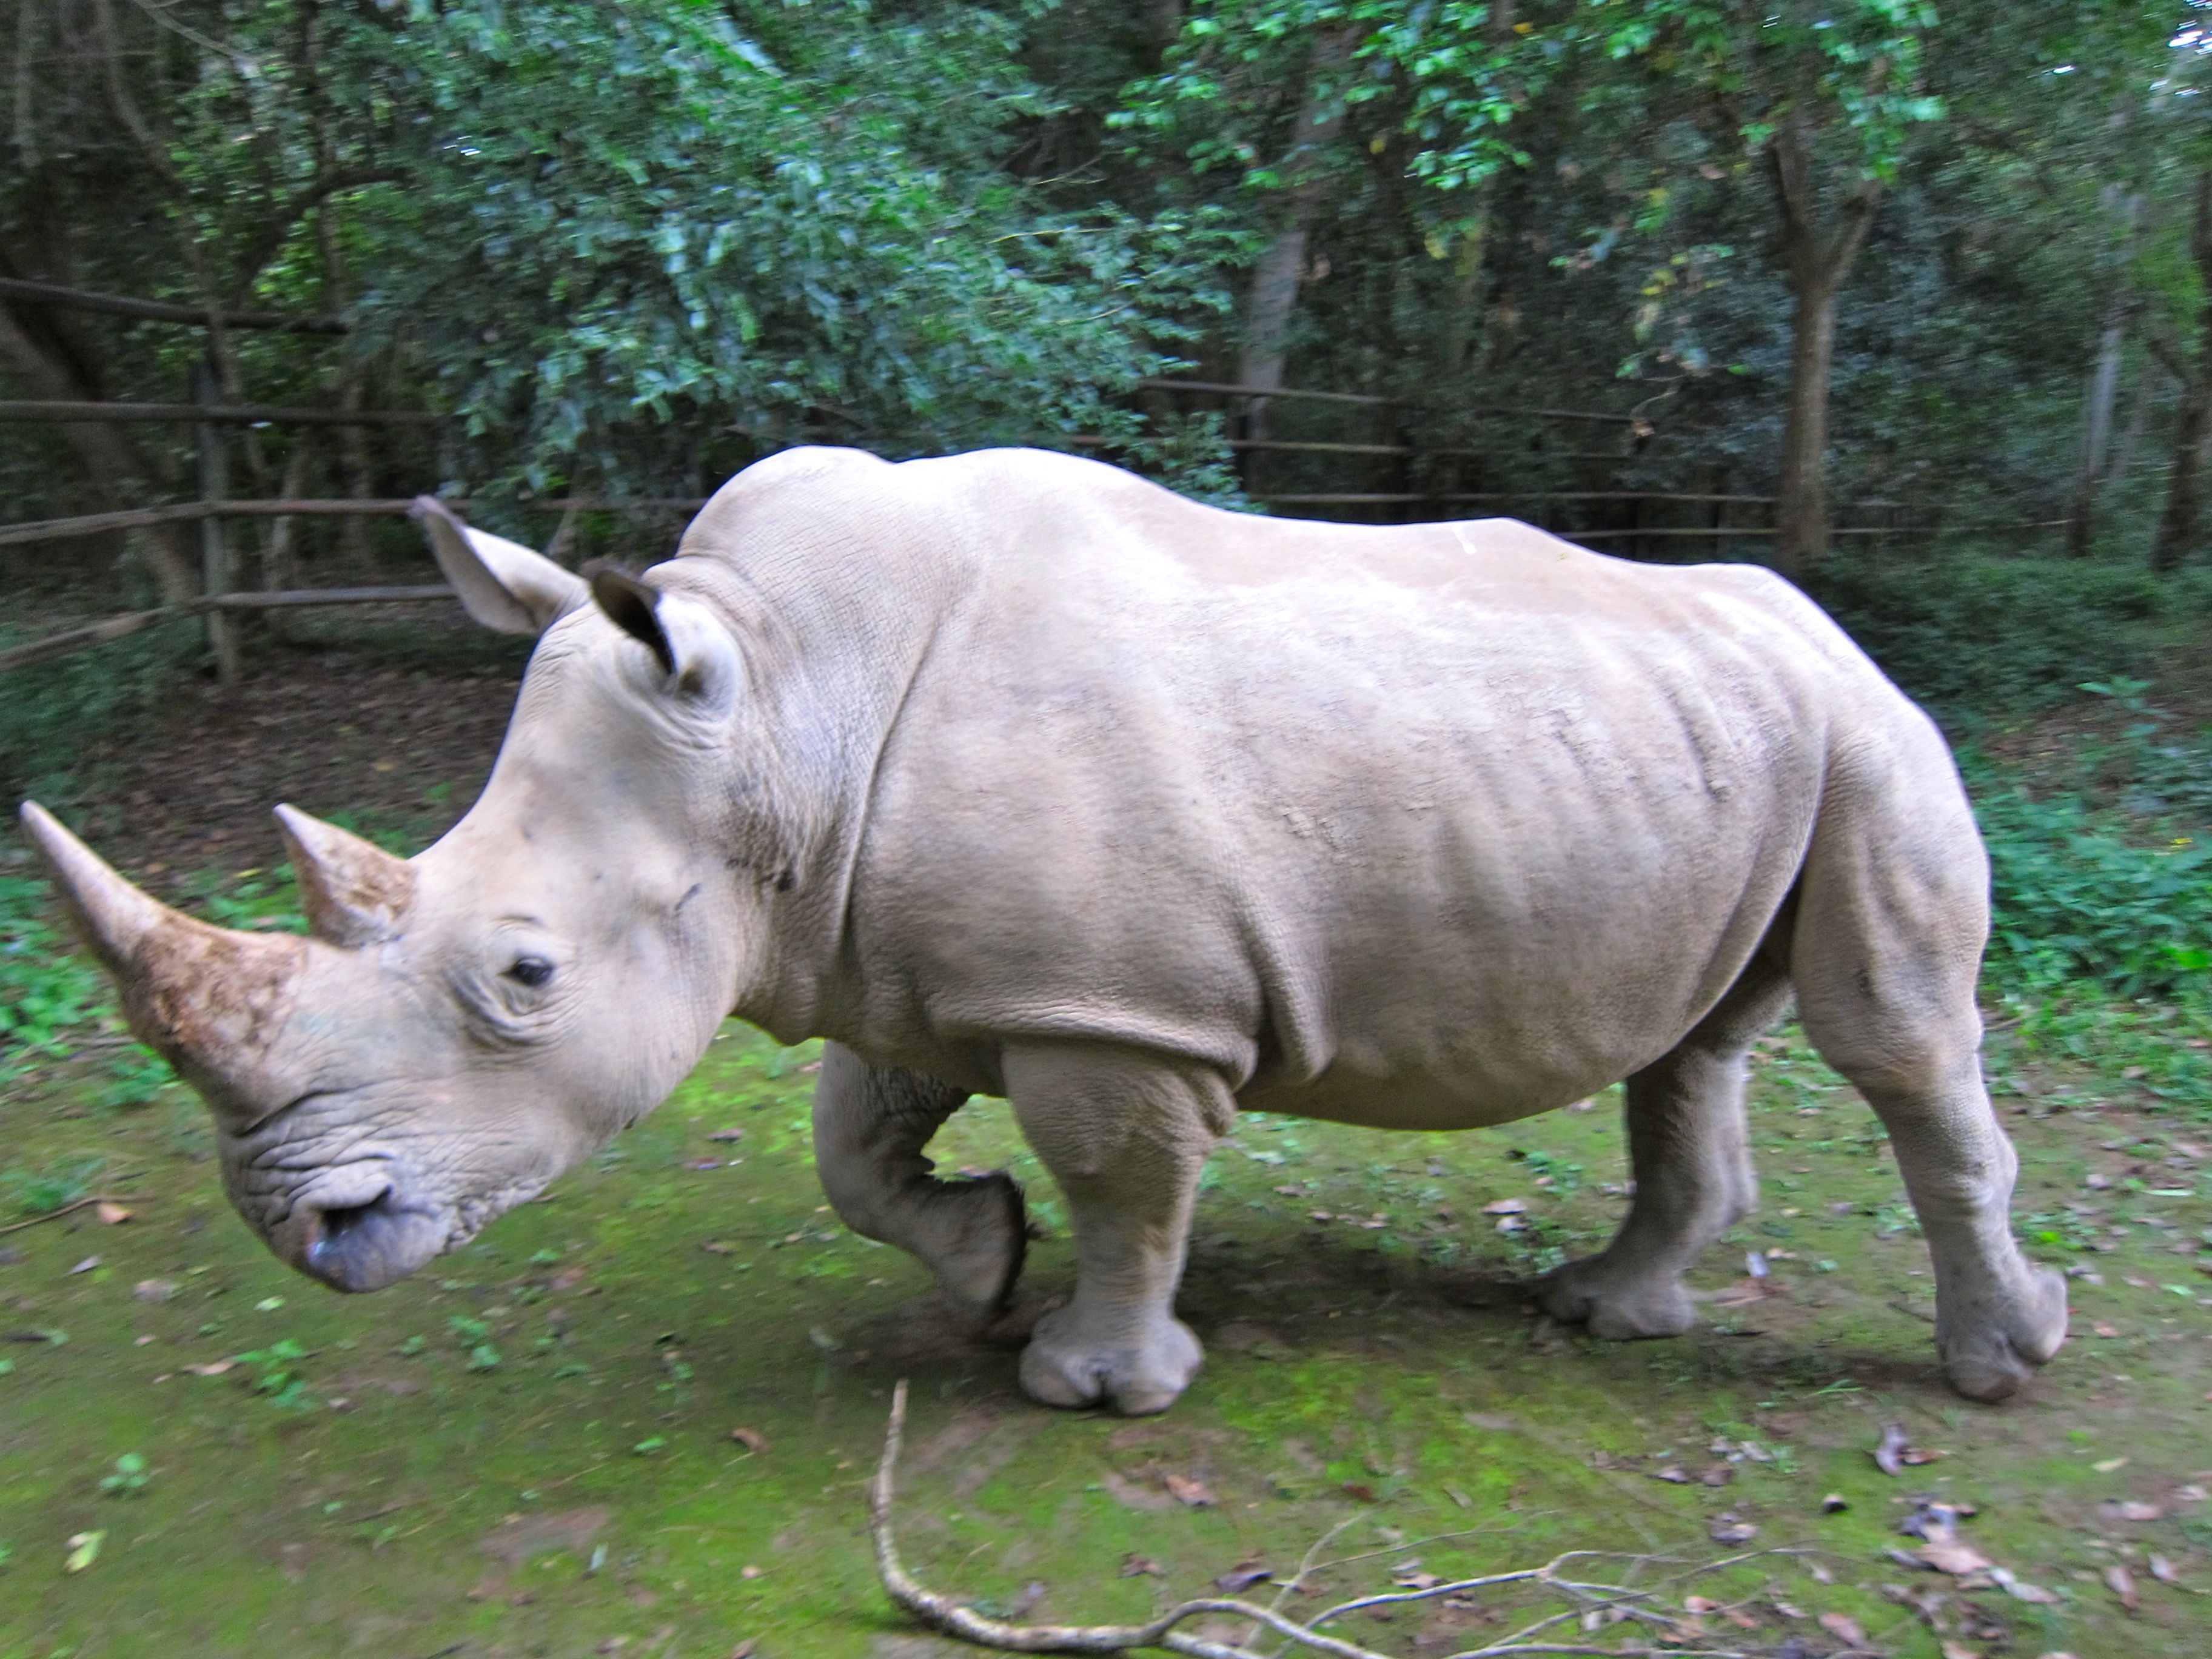 The Northern White Rhino (Ceratotherium simum cottoni) of central